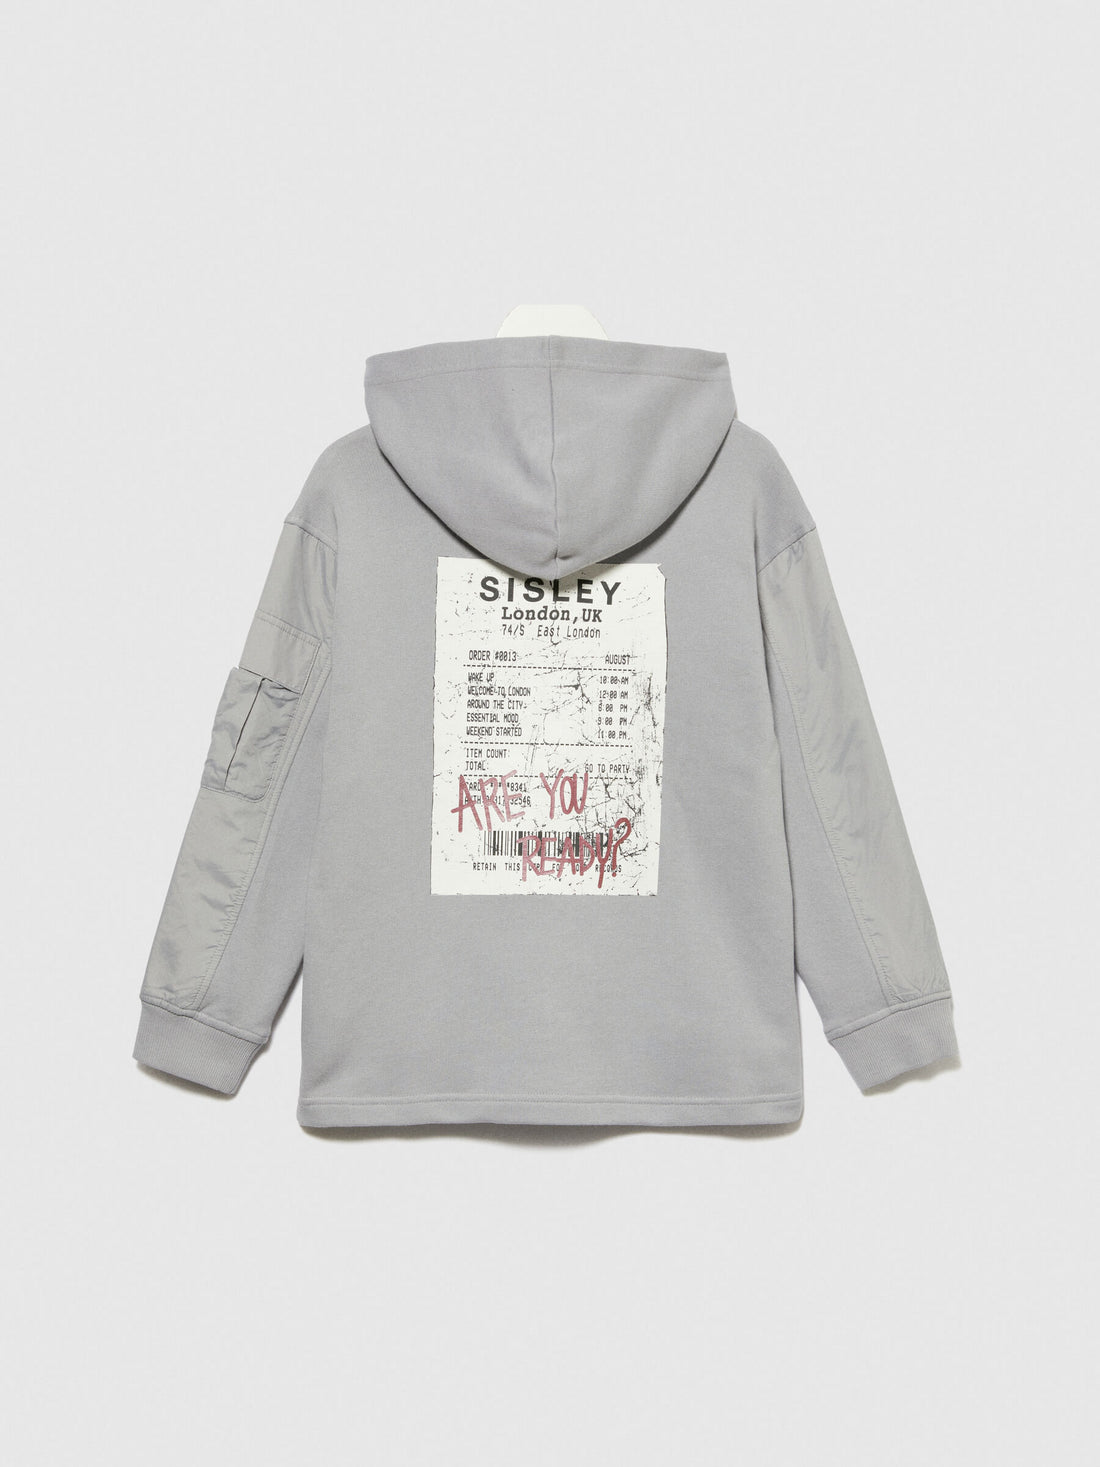 Mixed Material Sweatshirt With Maxi Print_3J68X200G_16K_02